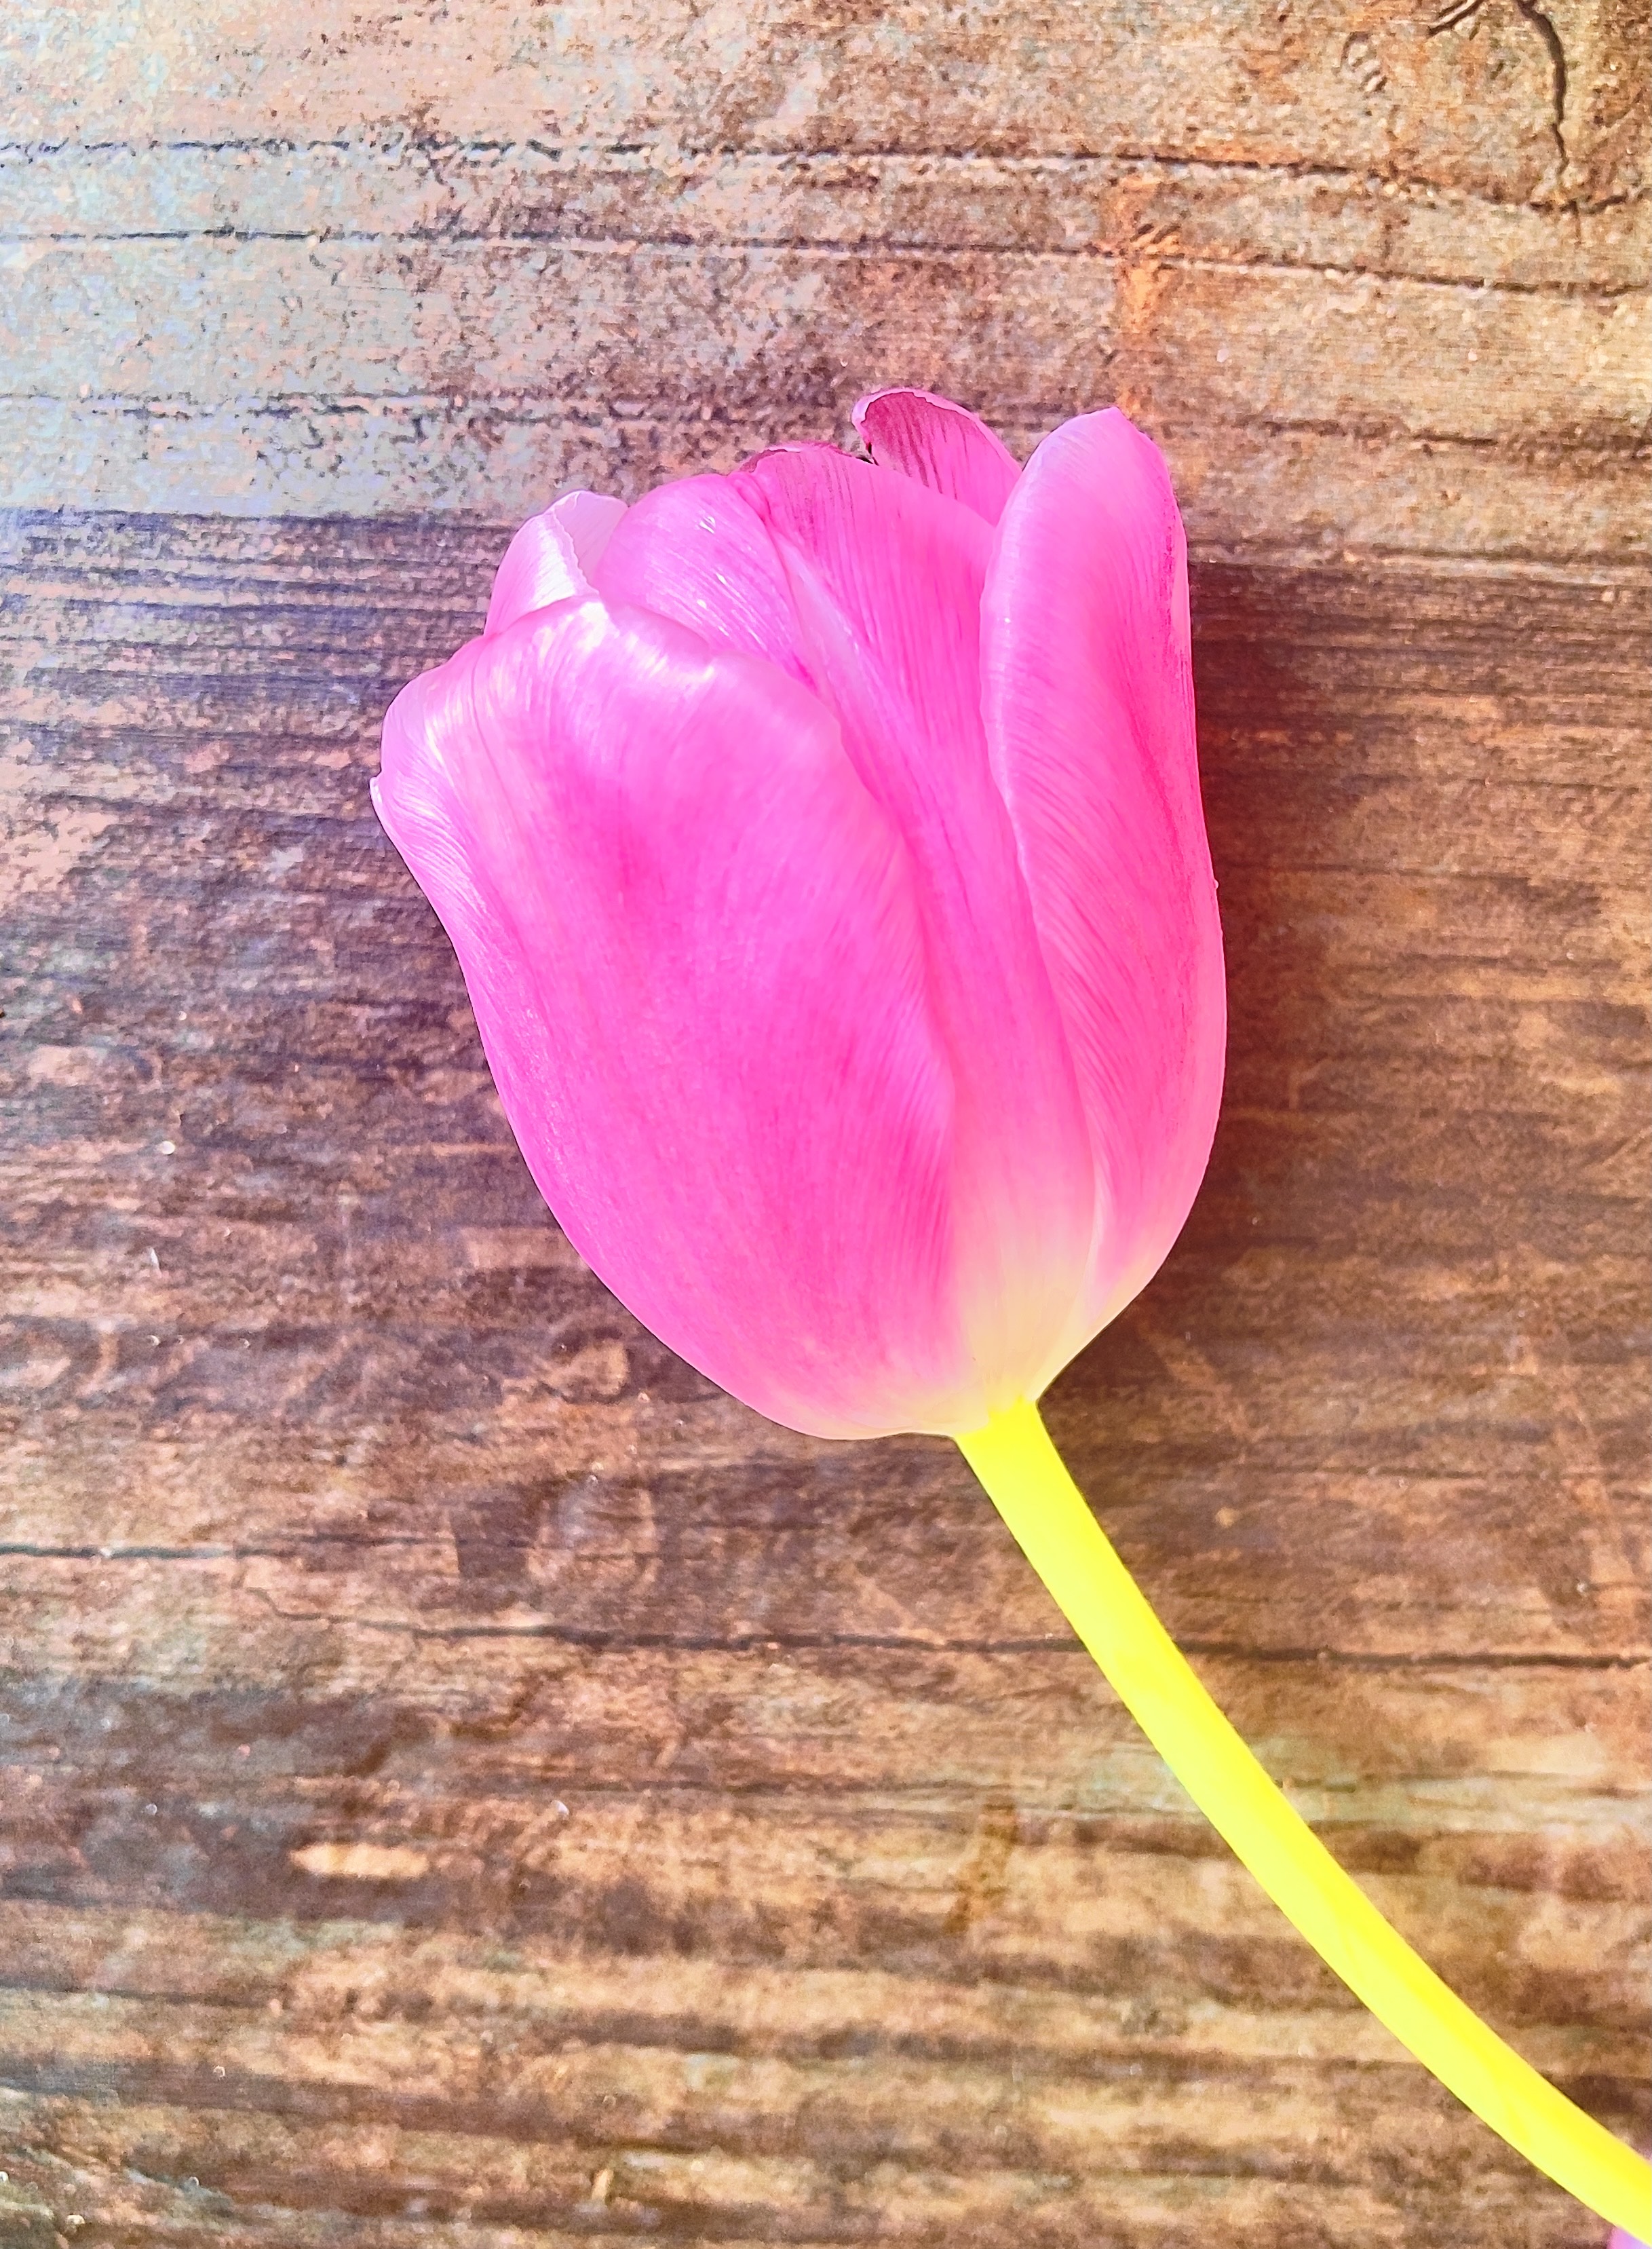 Seed Poem #11: The Pink Tulip